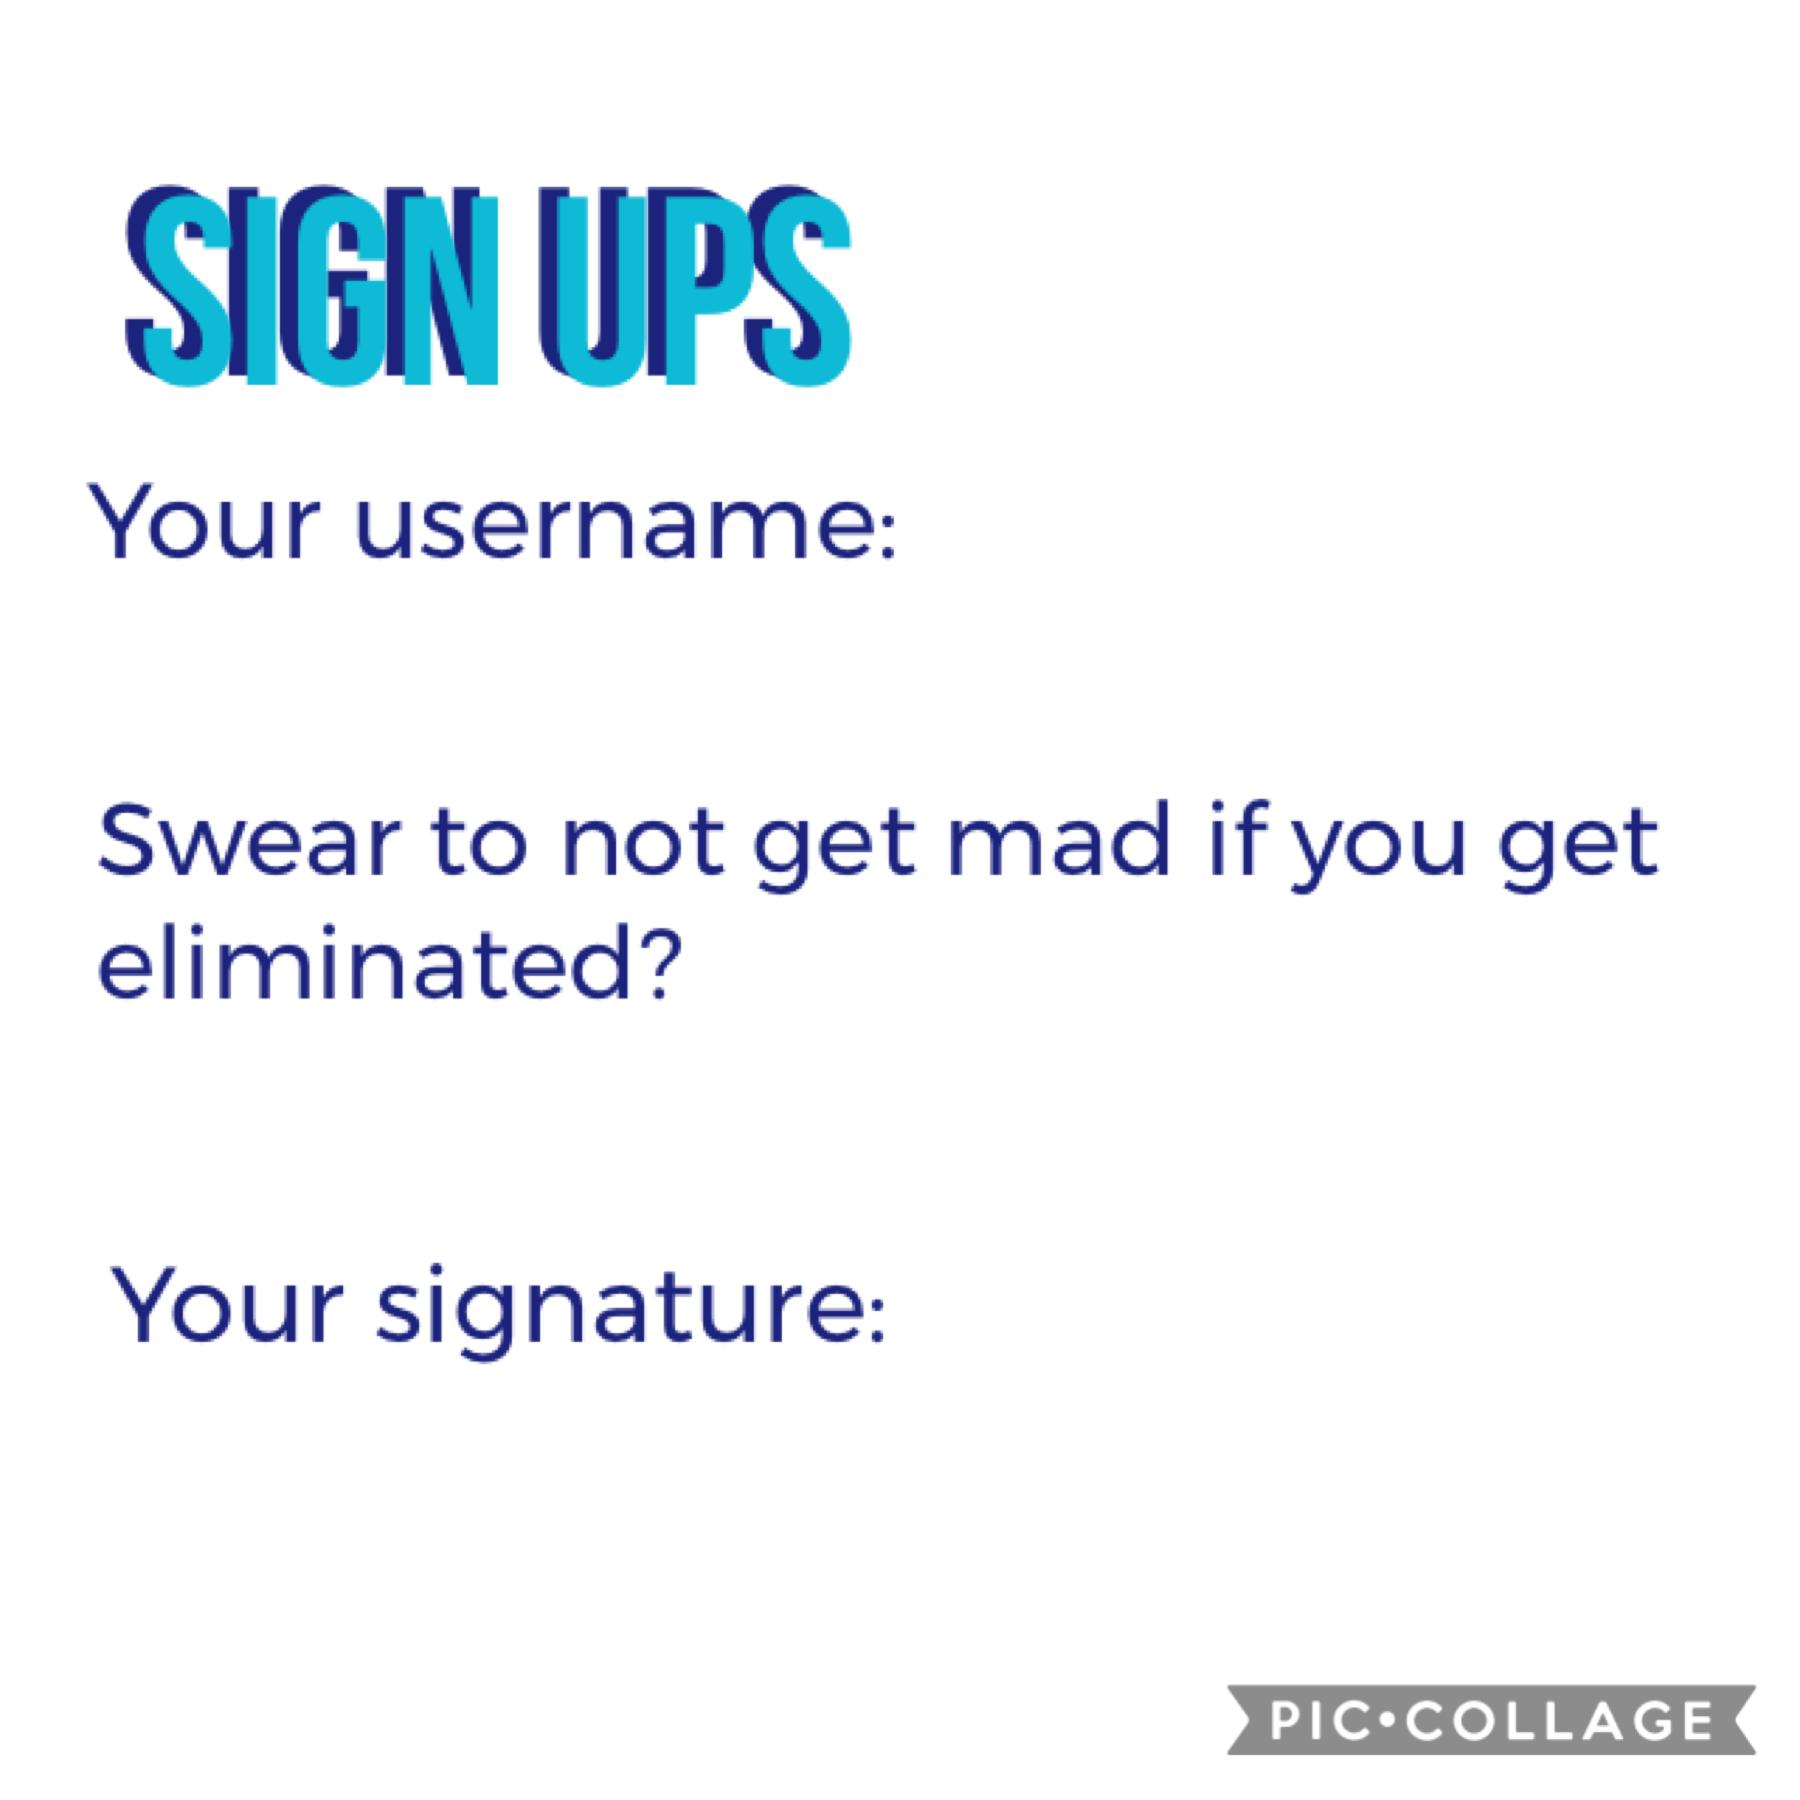 Sign ups